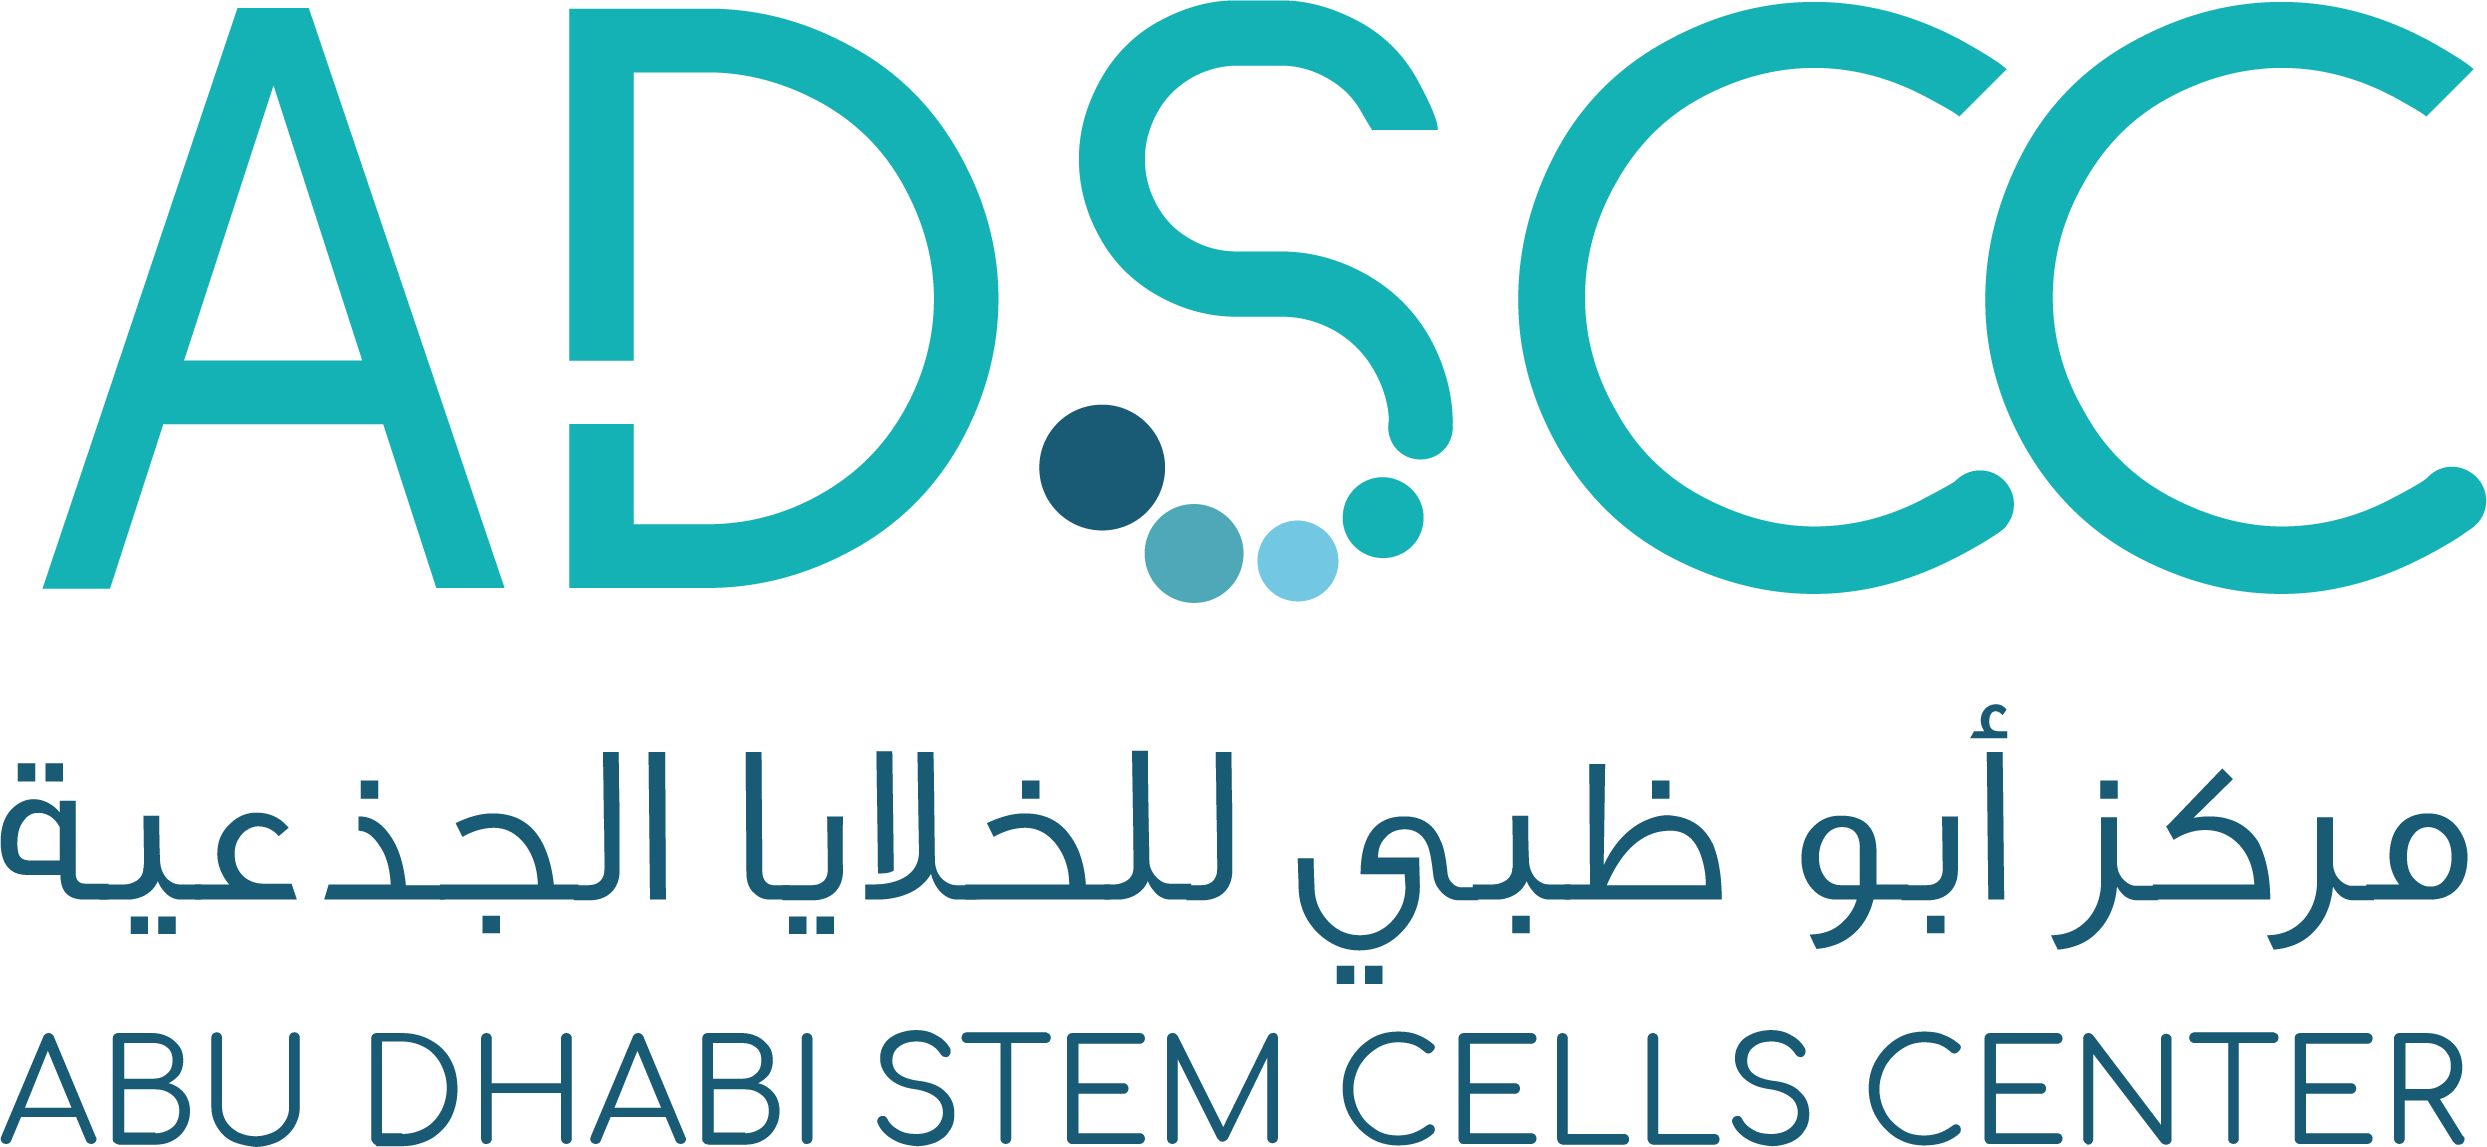 Aby Dhabi Stem Cells Center